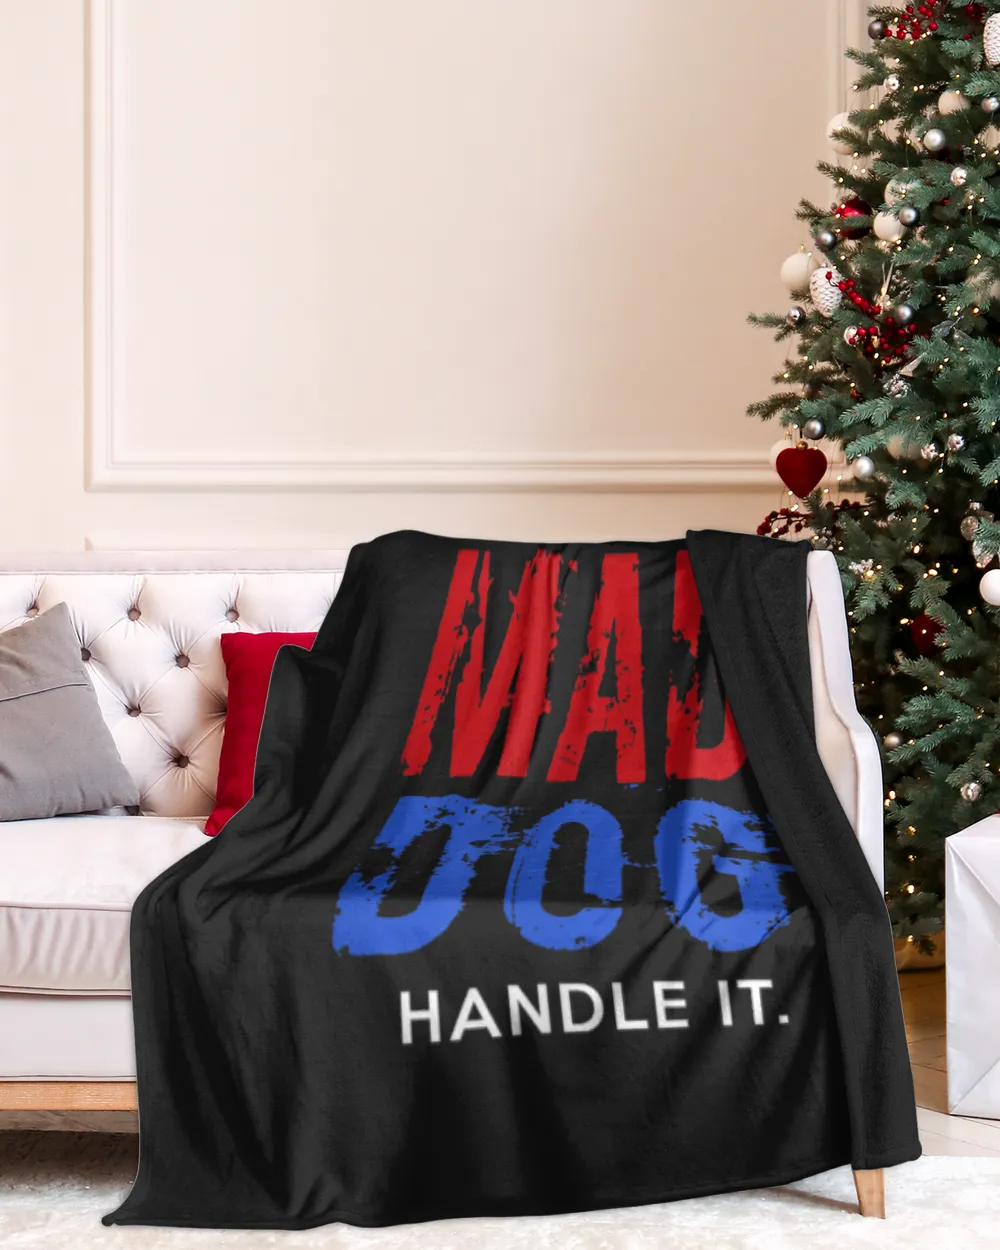 Mad Dog Mattis T Shirts - Let General Mattis handle it